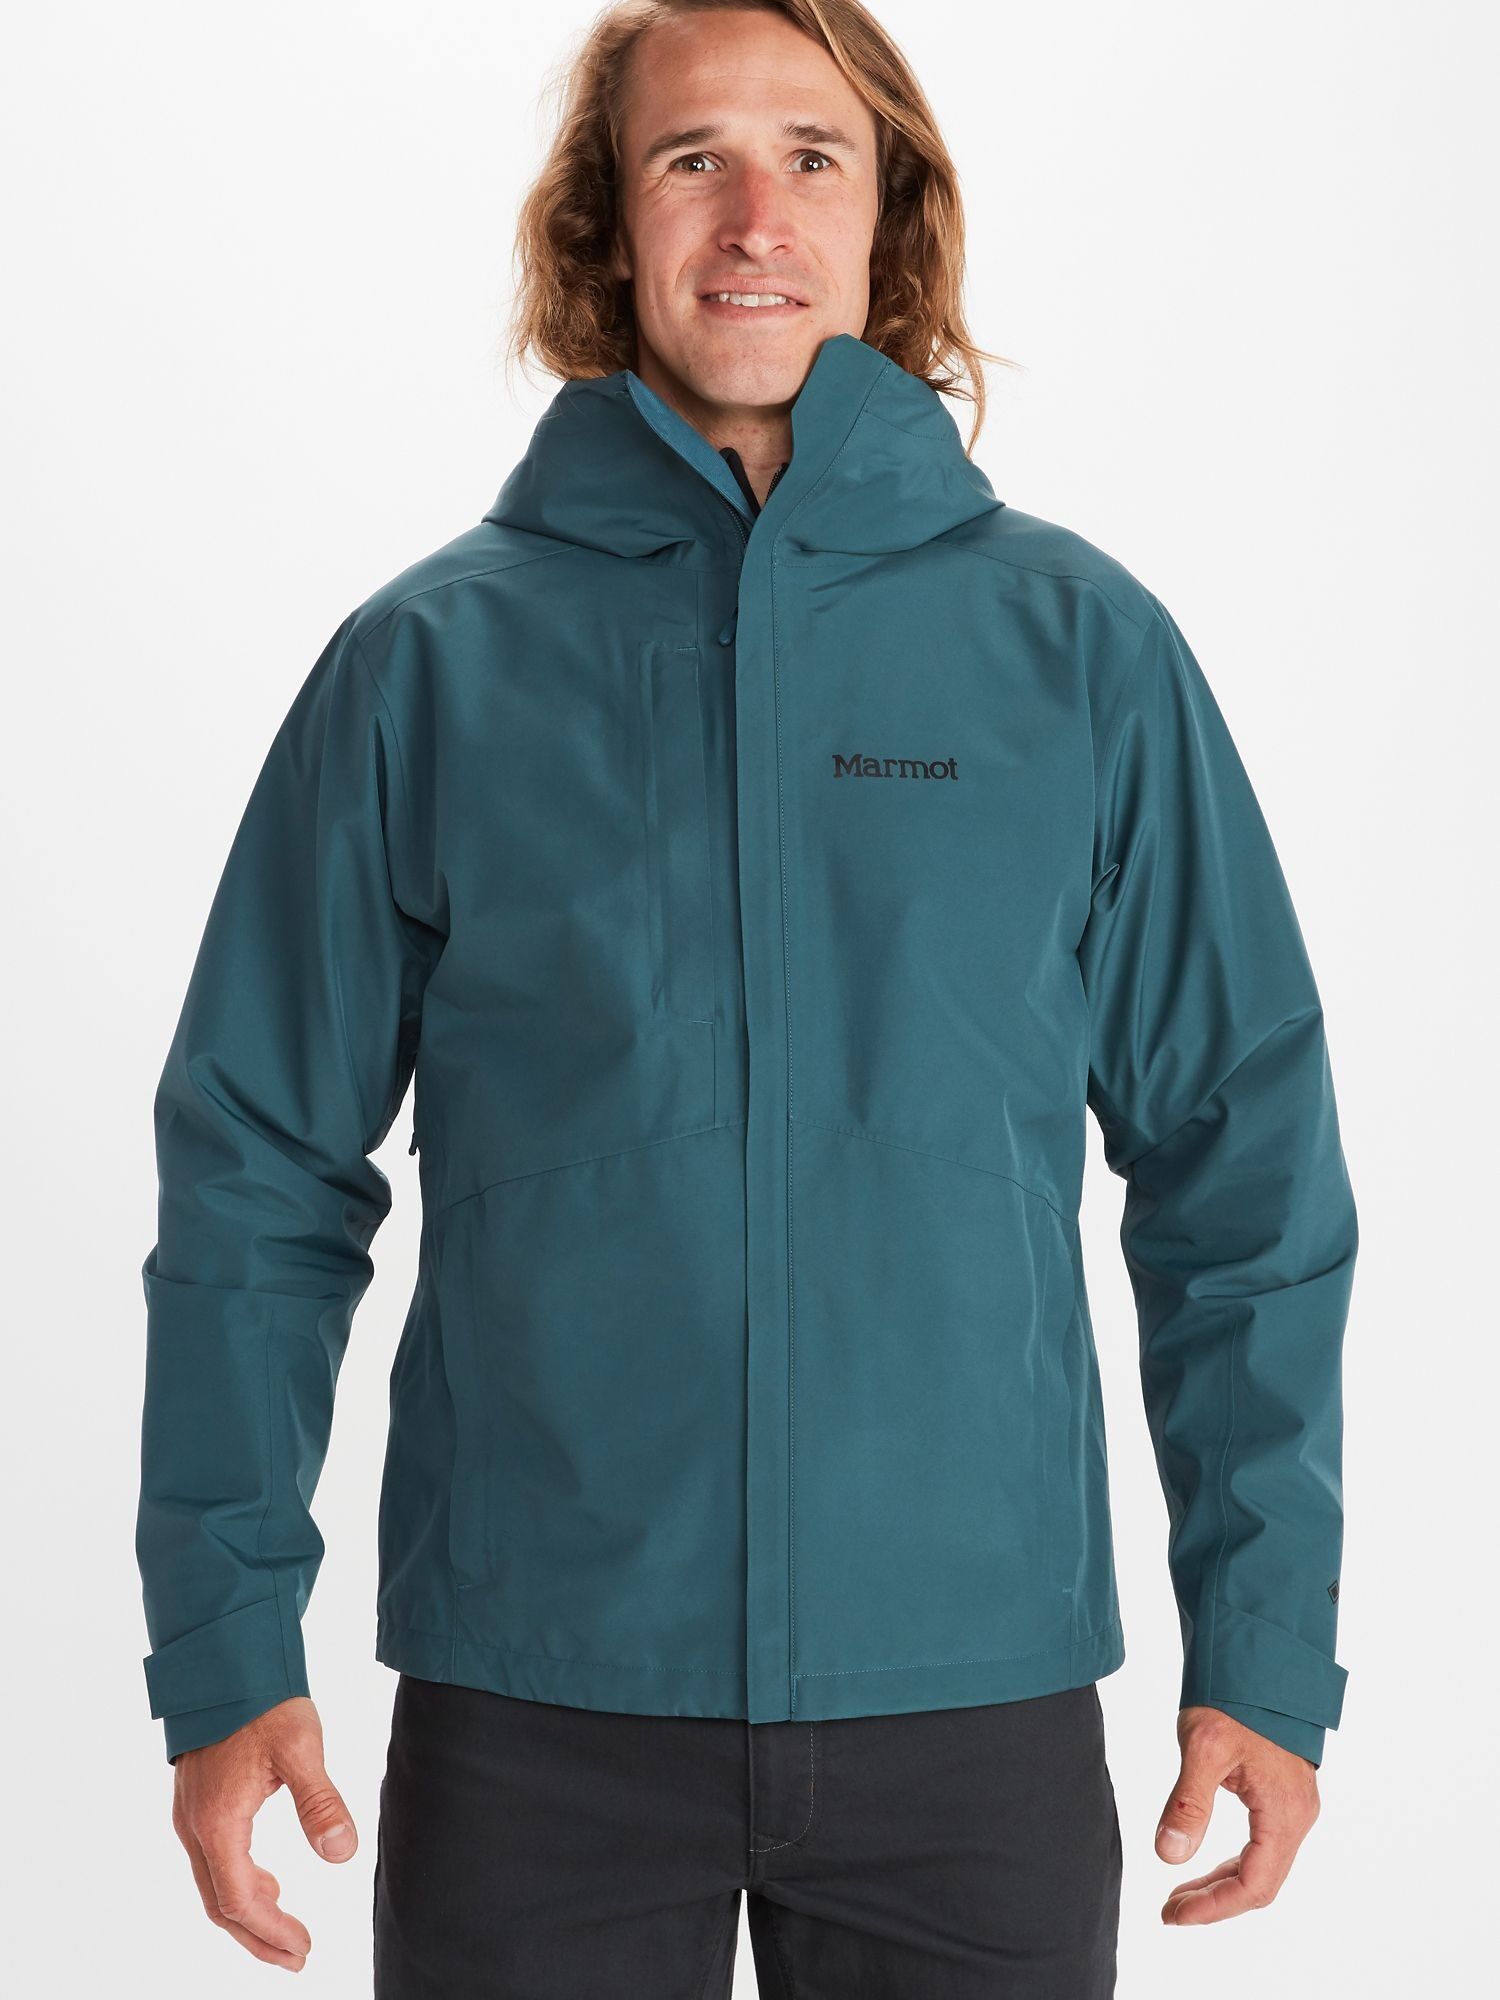 Marmot Minimalist Jacket - Hardshell jacket - Men's